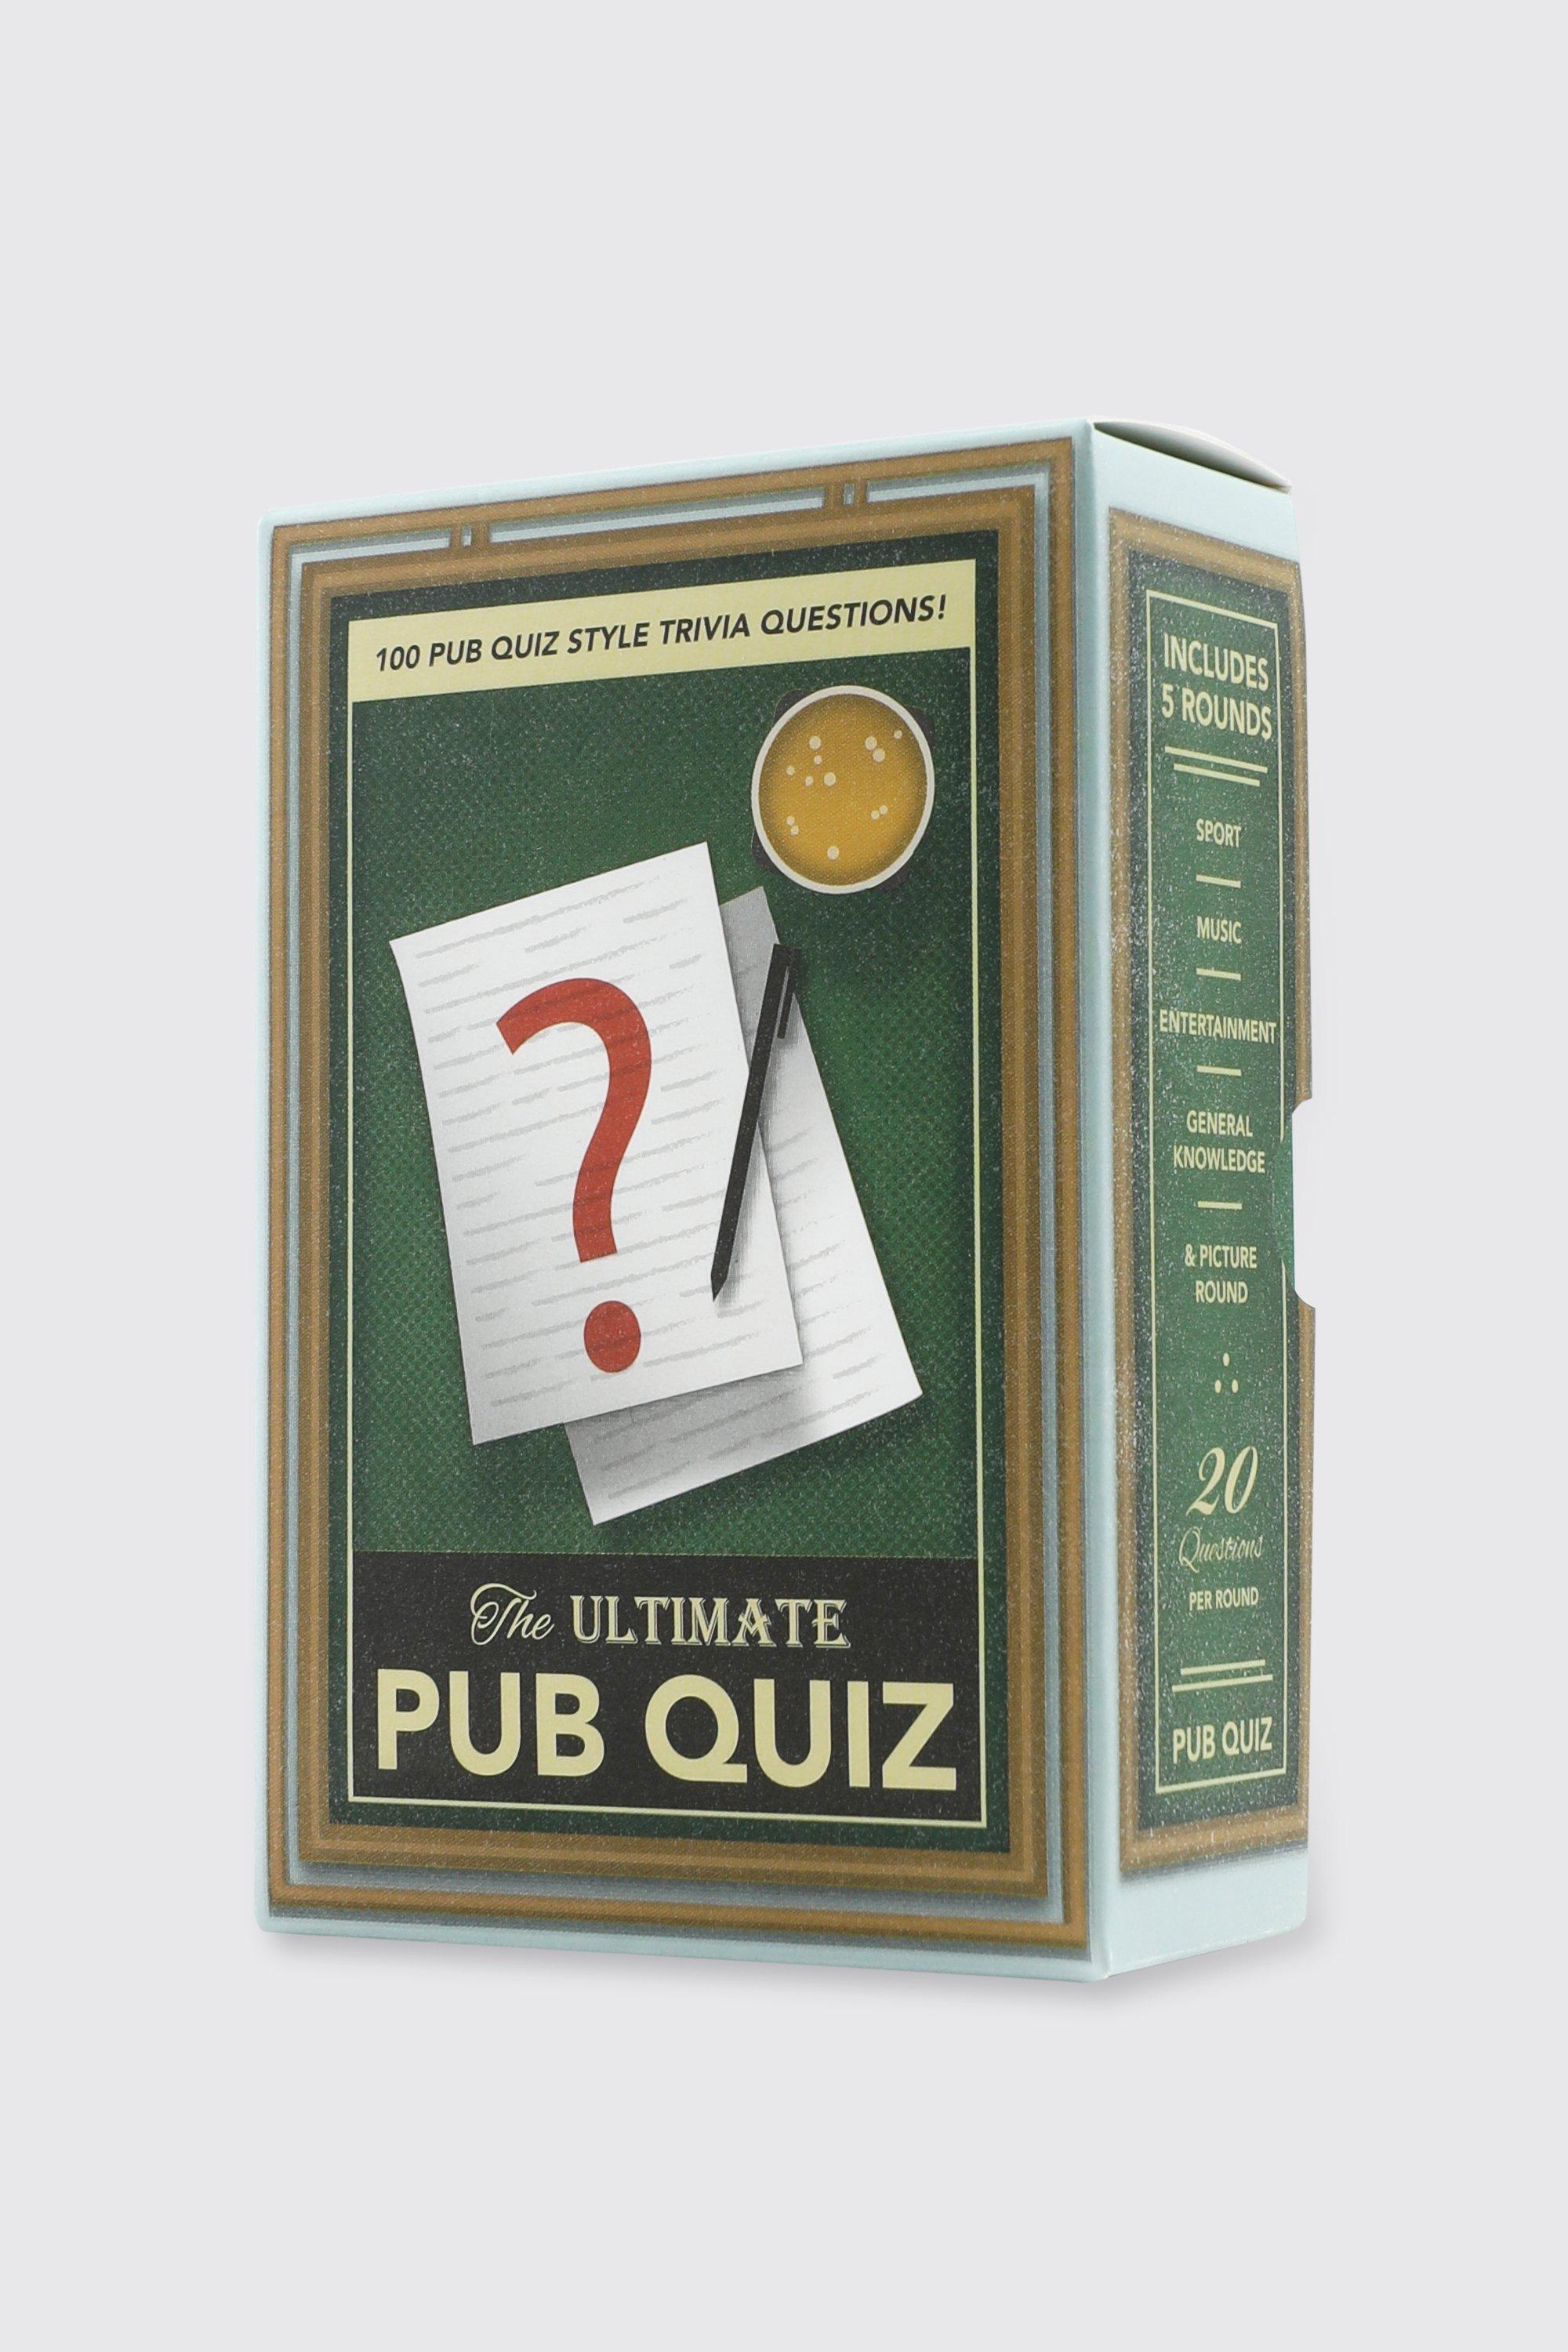 Pub Quiz Night Questions